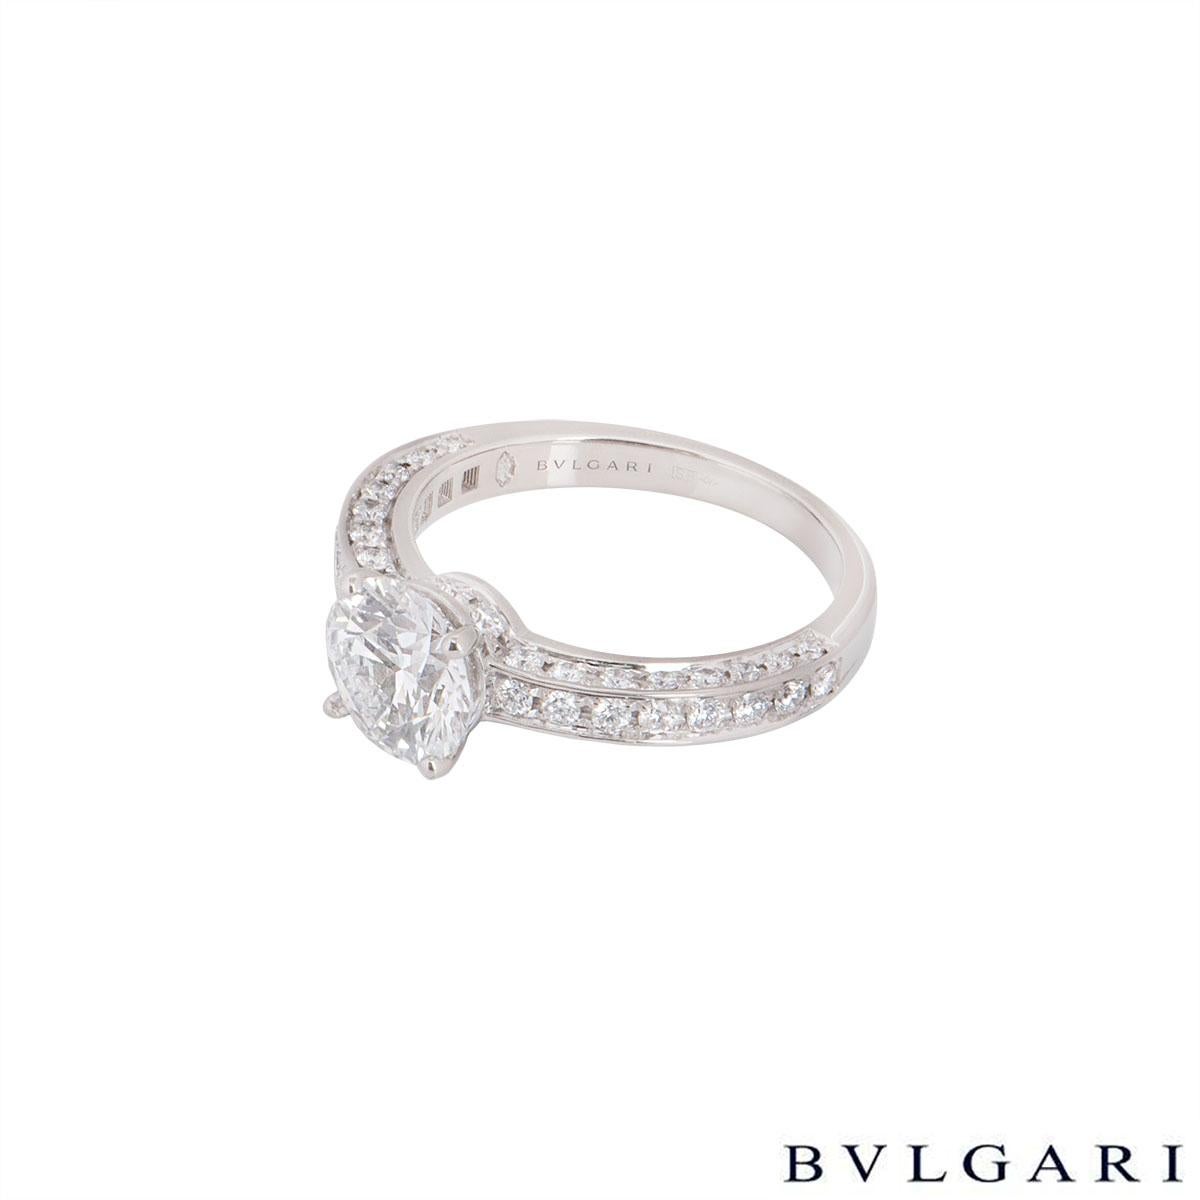 Round Cut Bulgari Diamond Dedicata A Venezia Ring 1.50 Carat D Colour GIA Certified